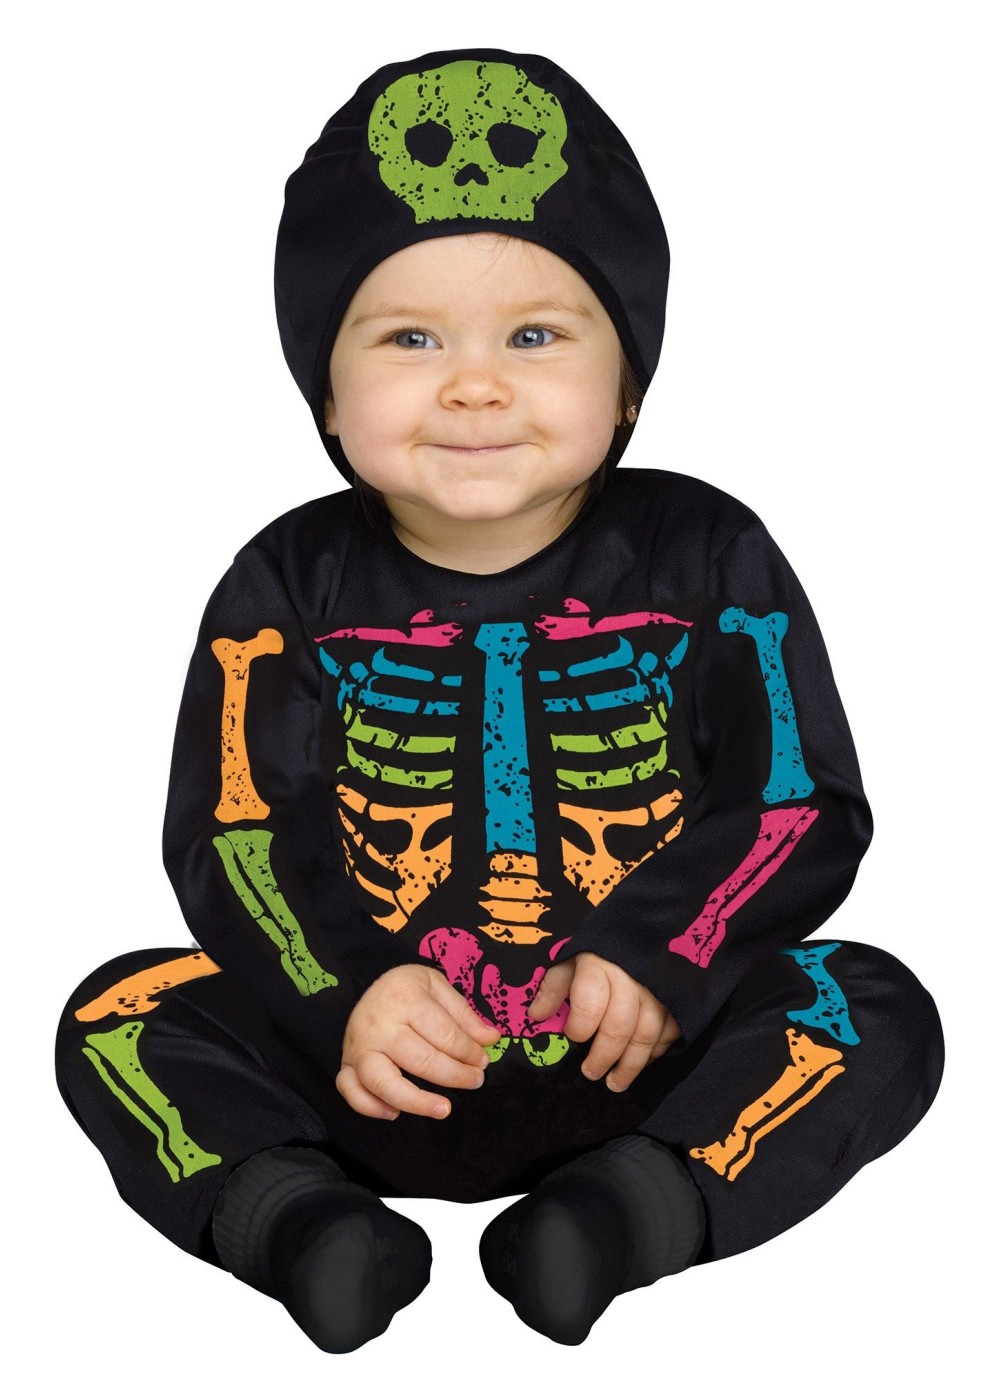 Baby Bones Skeleton Rainbow Color Costume